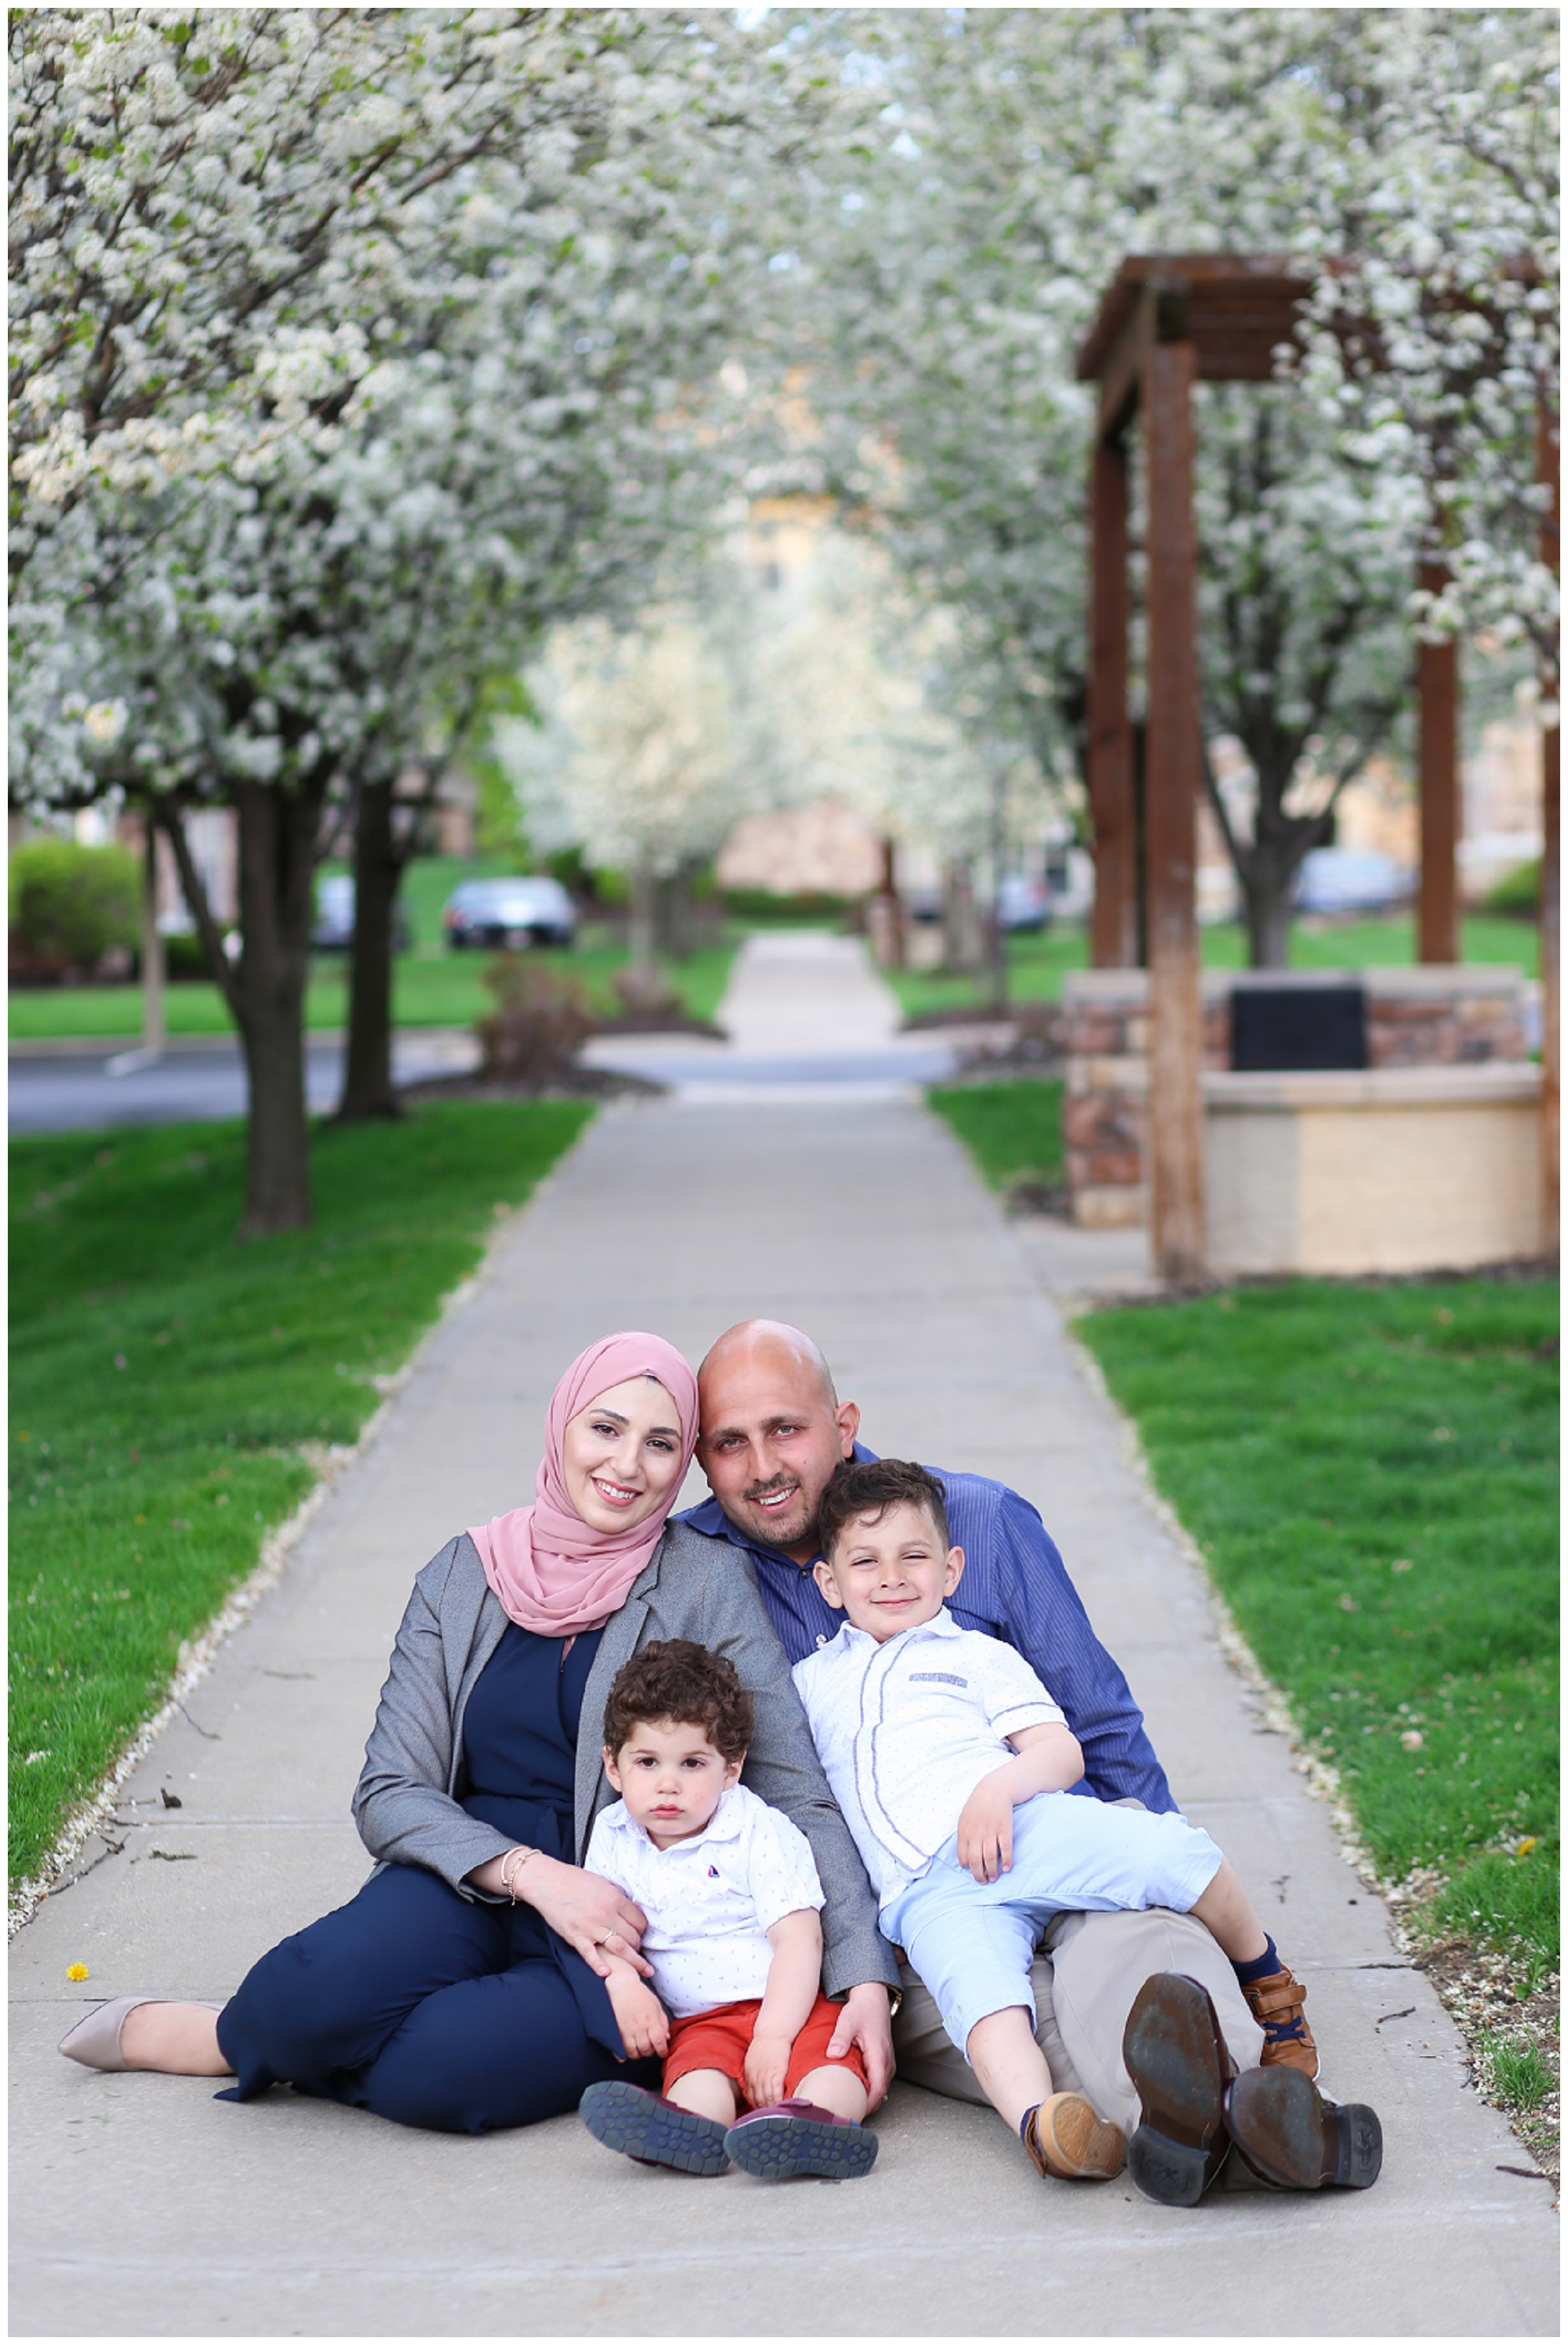 Outdoor Spring Family Portraits - Lifestyle Portrait Wedding Photographer Kansas City Overland Park 